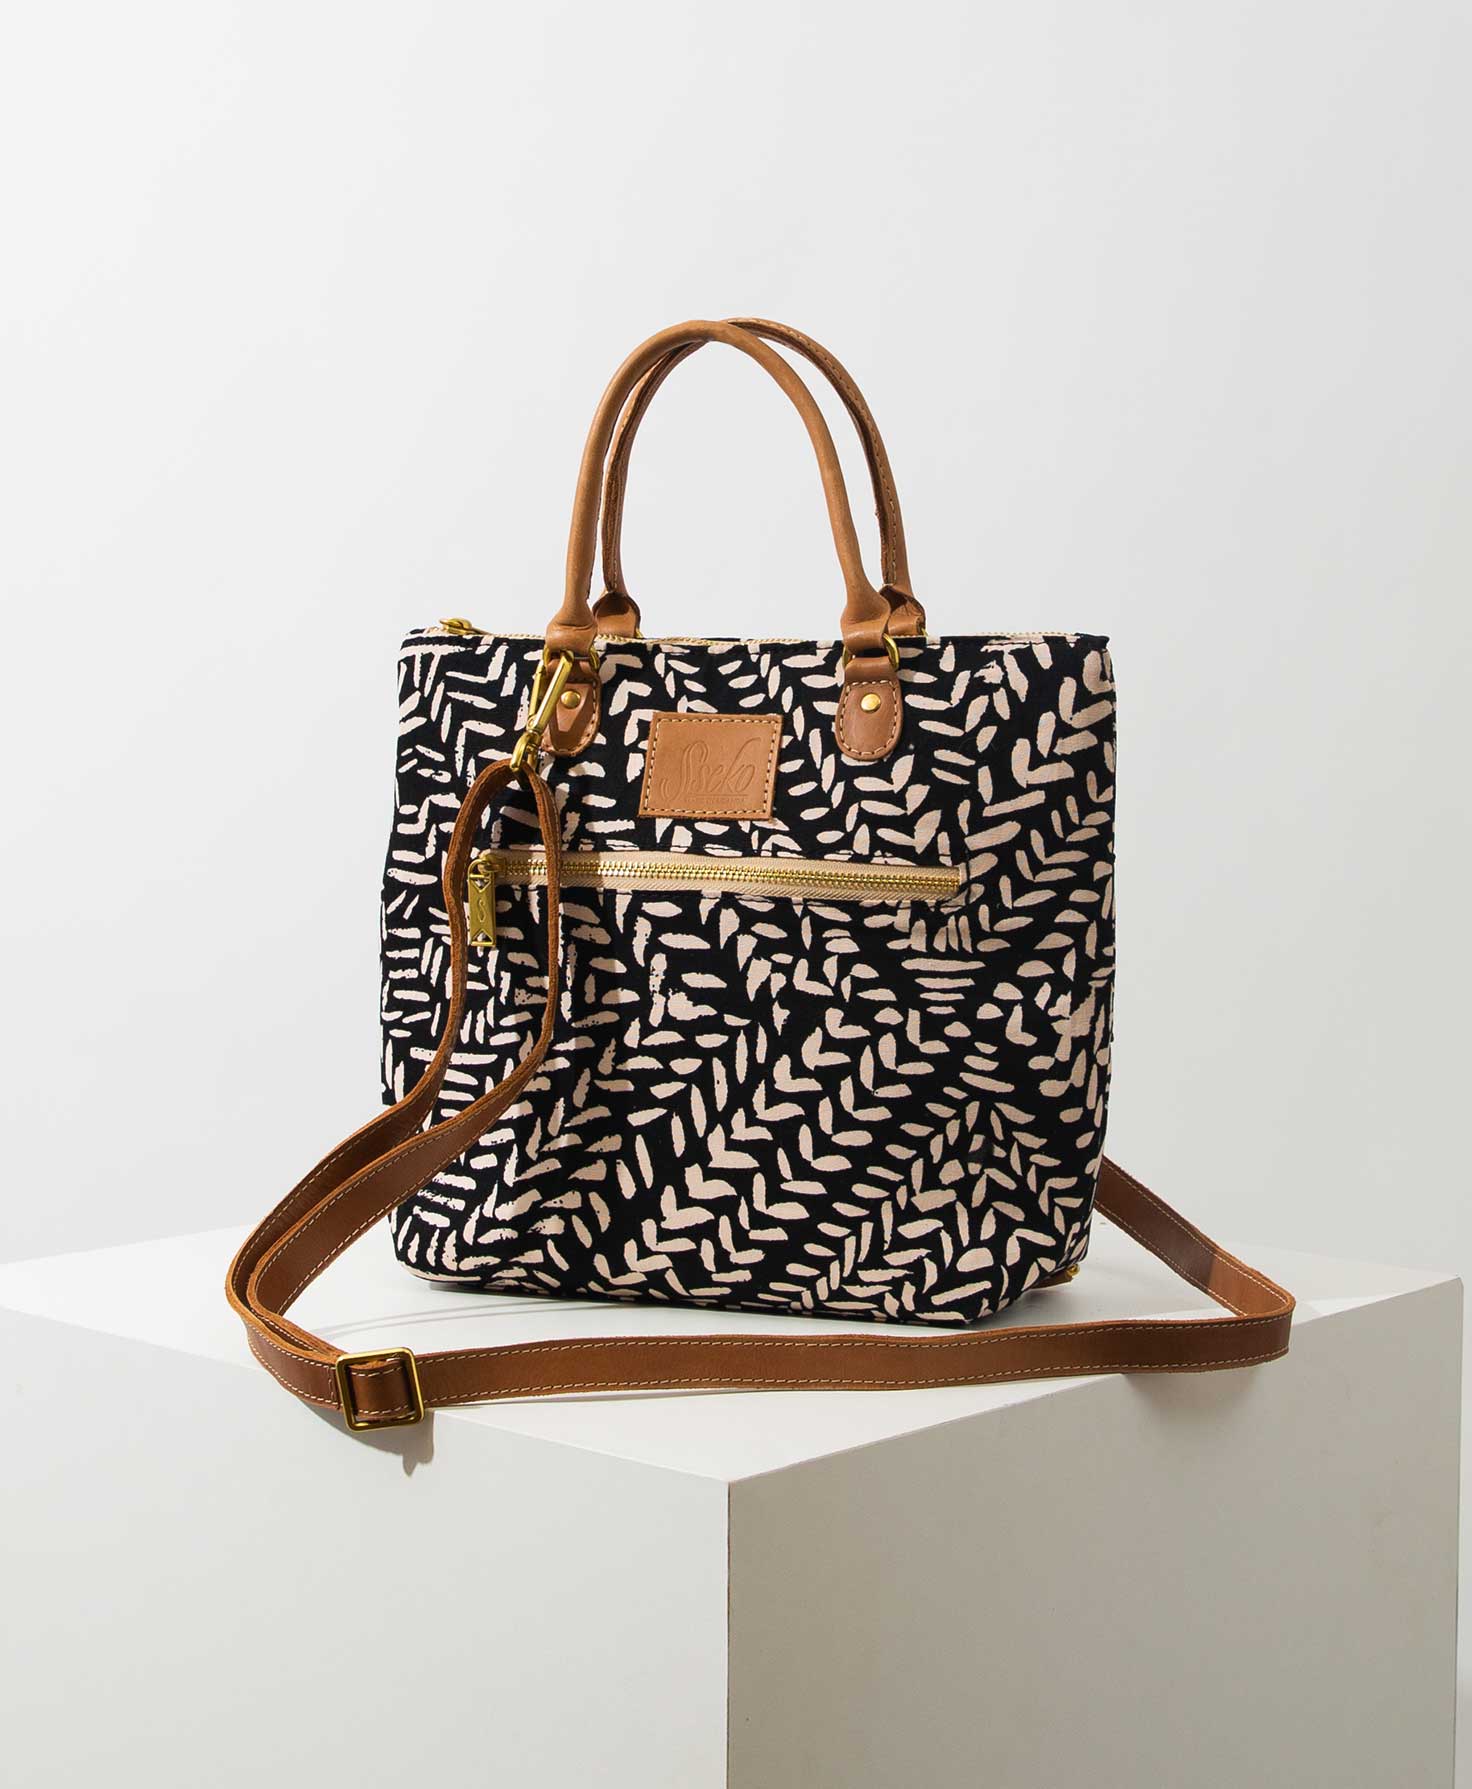 Zara World BAGS Gorgeous Stylish Handbag, attractive and classic